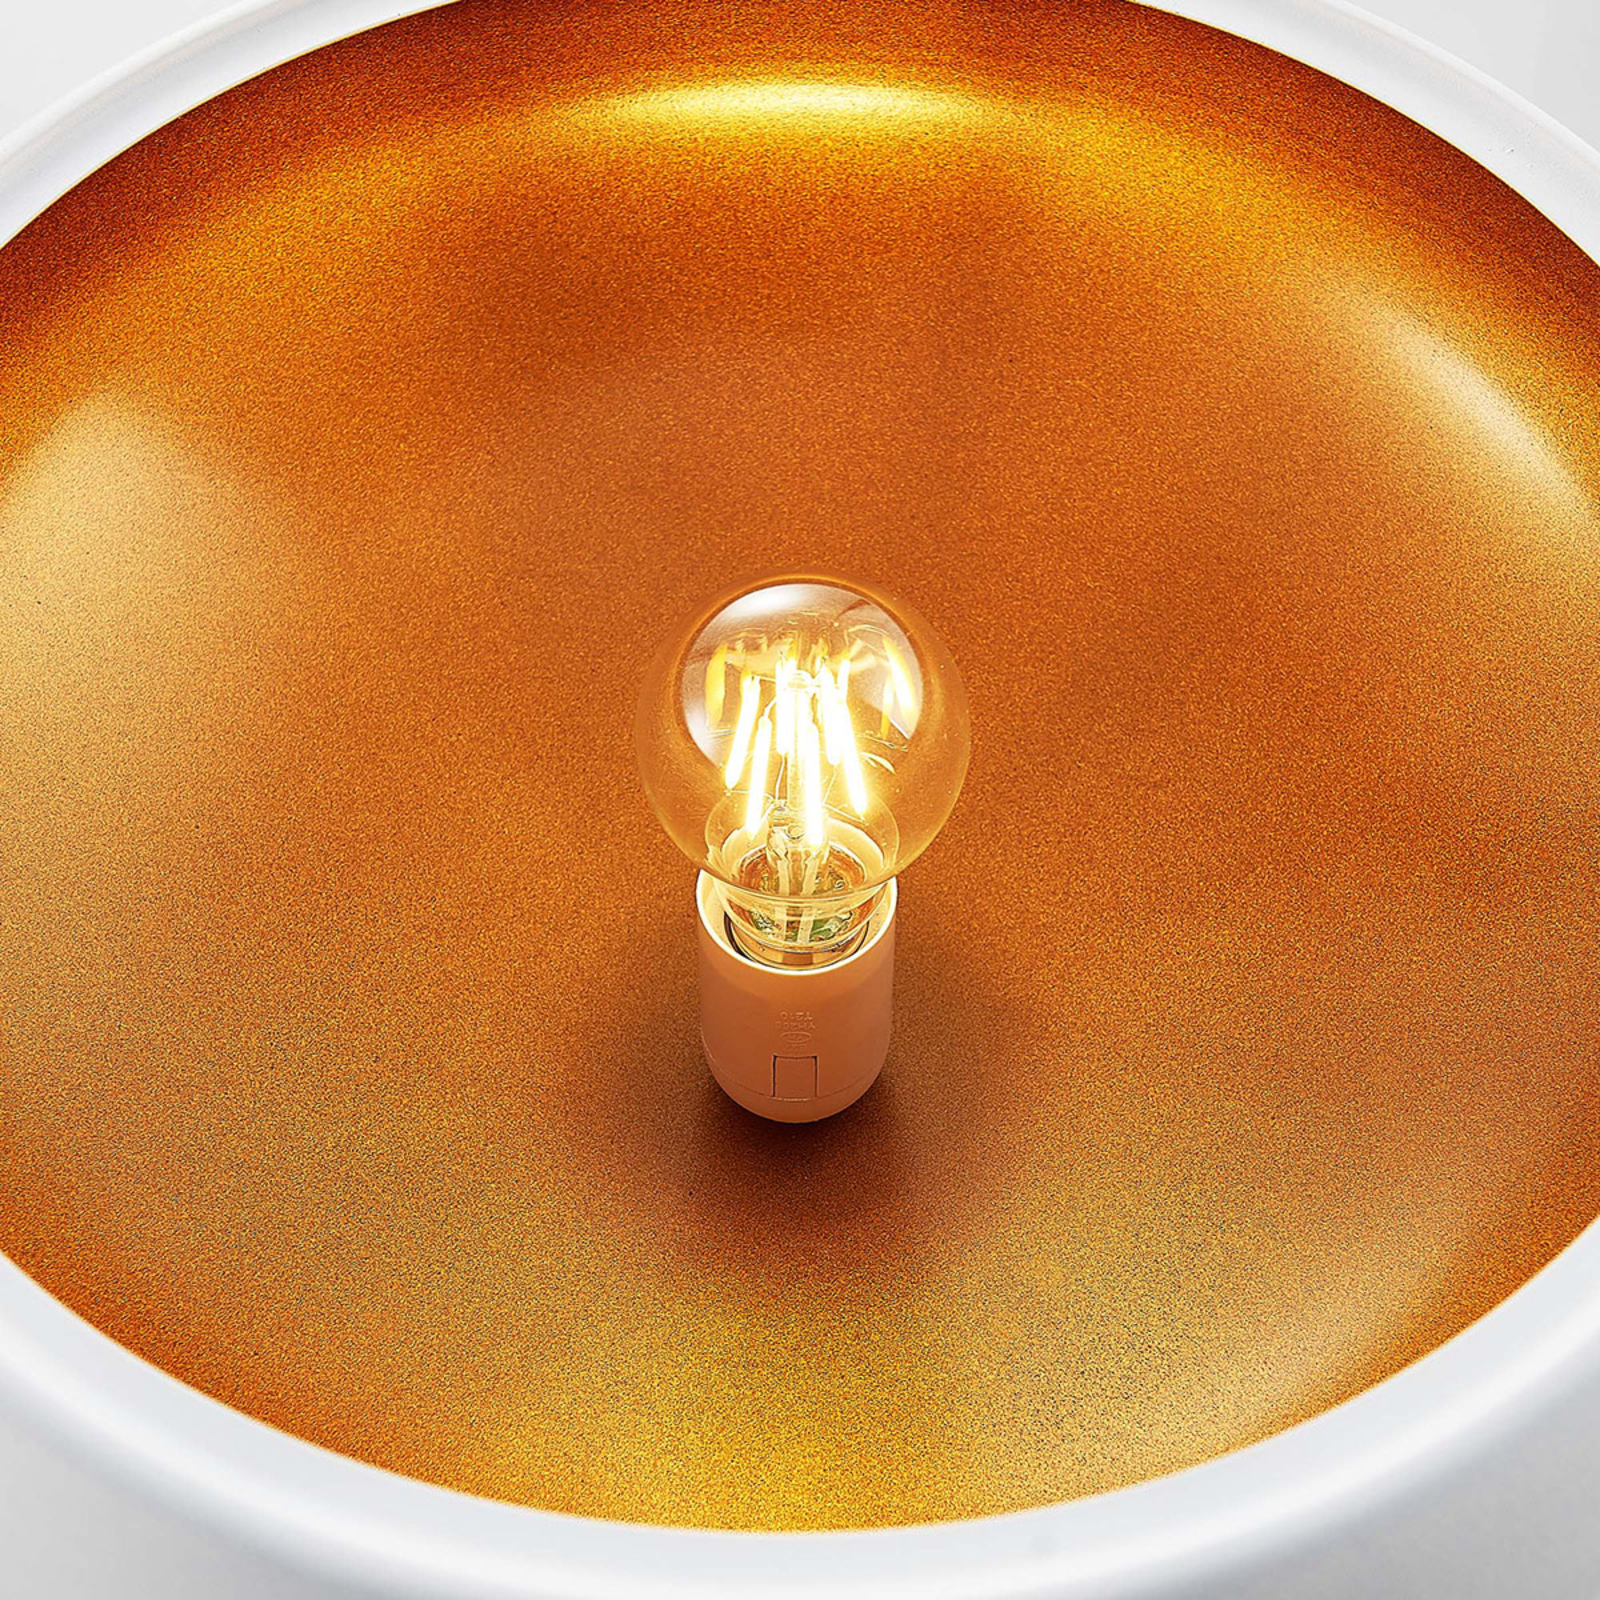 Metall-Deckenlampe Gerwina, weiß-gold